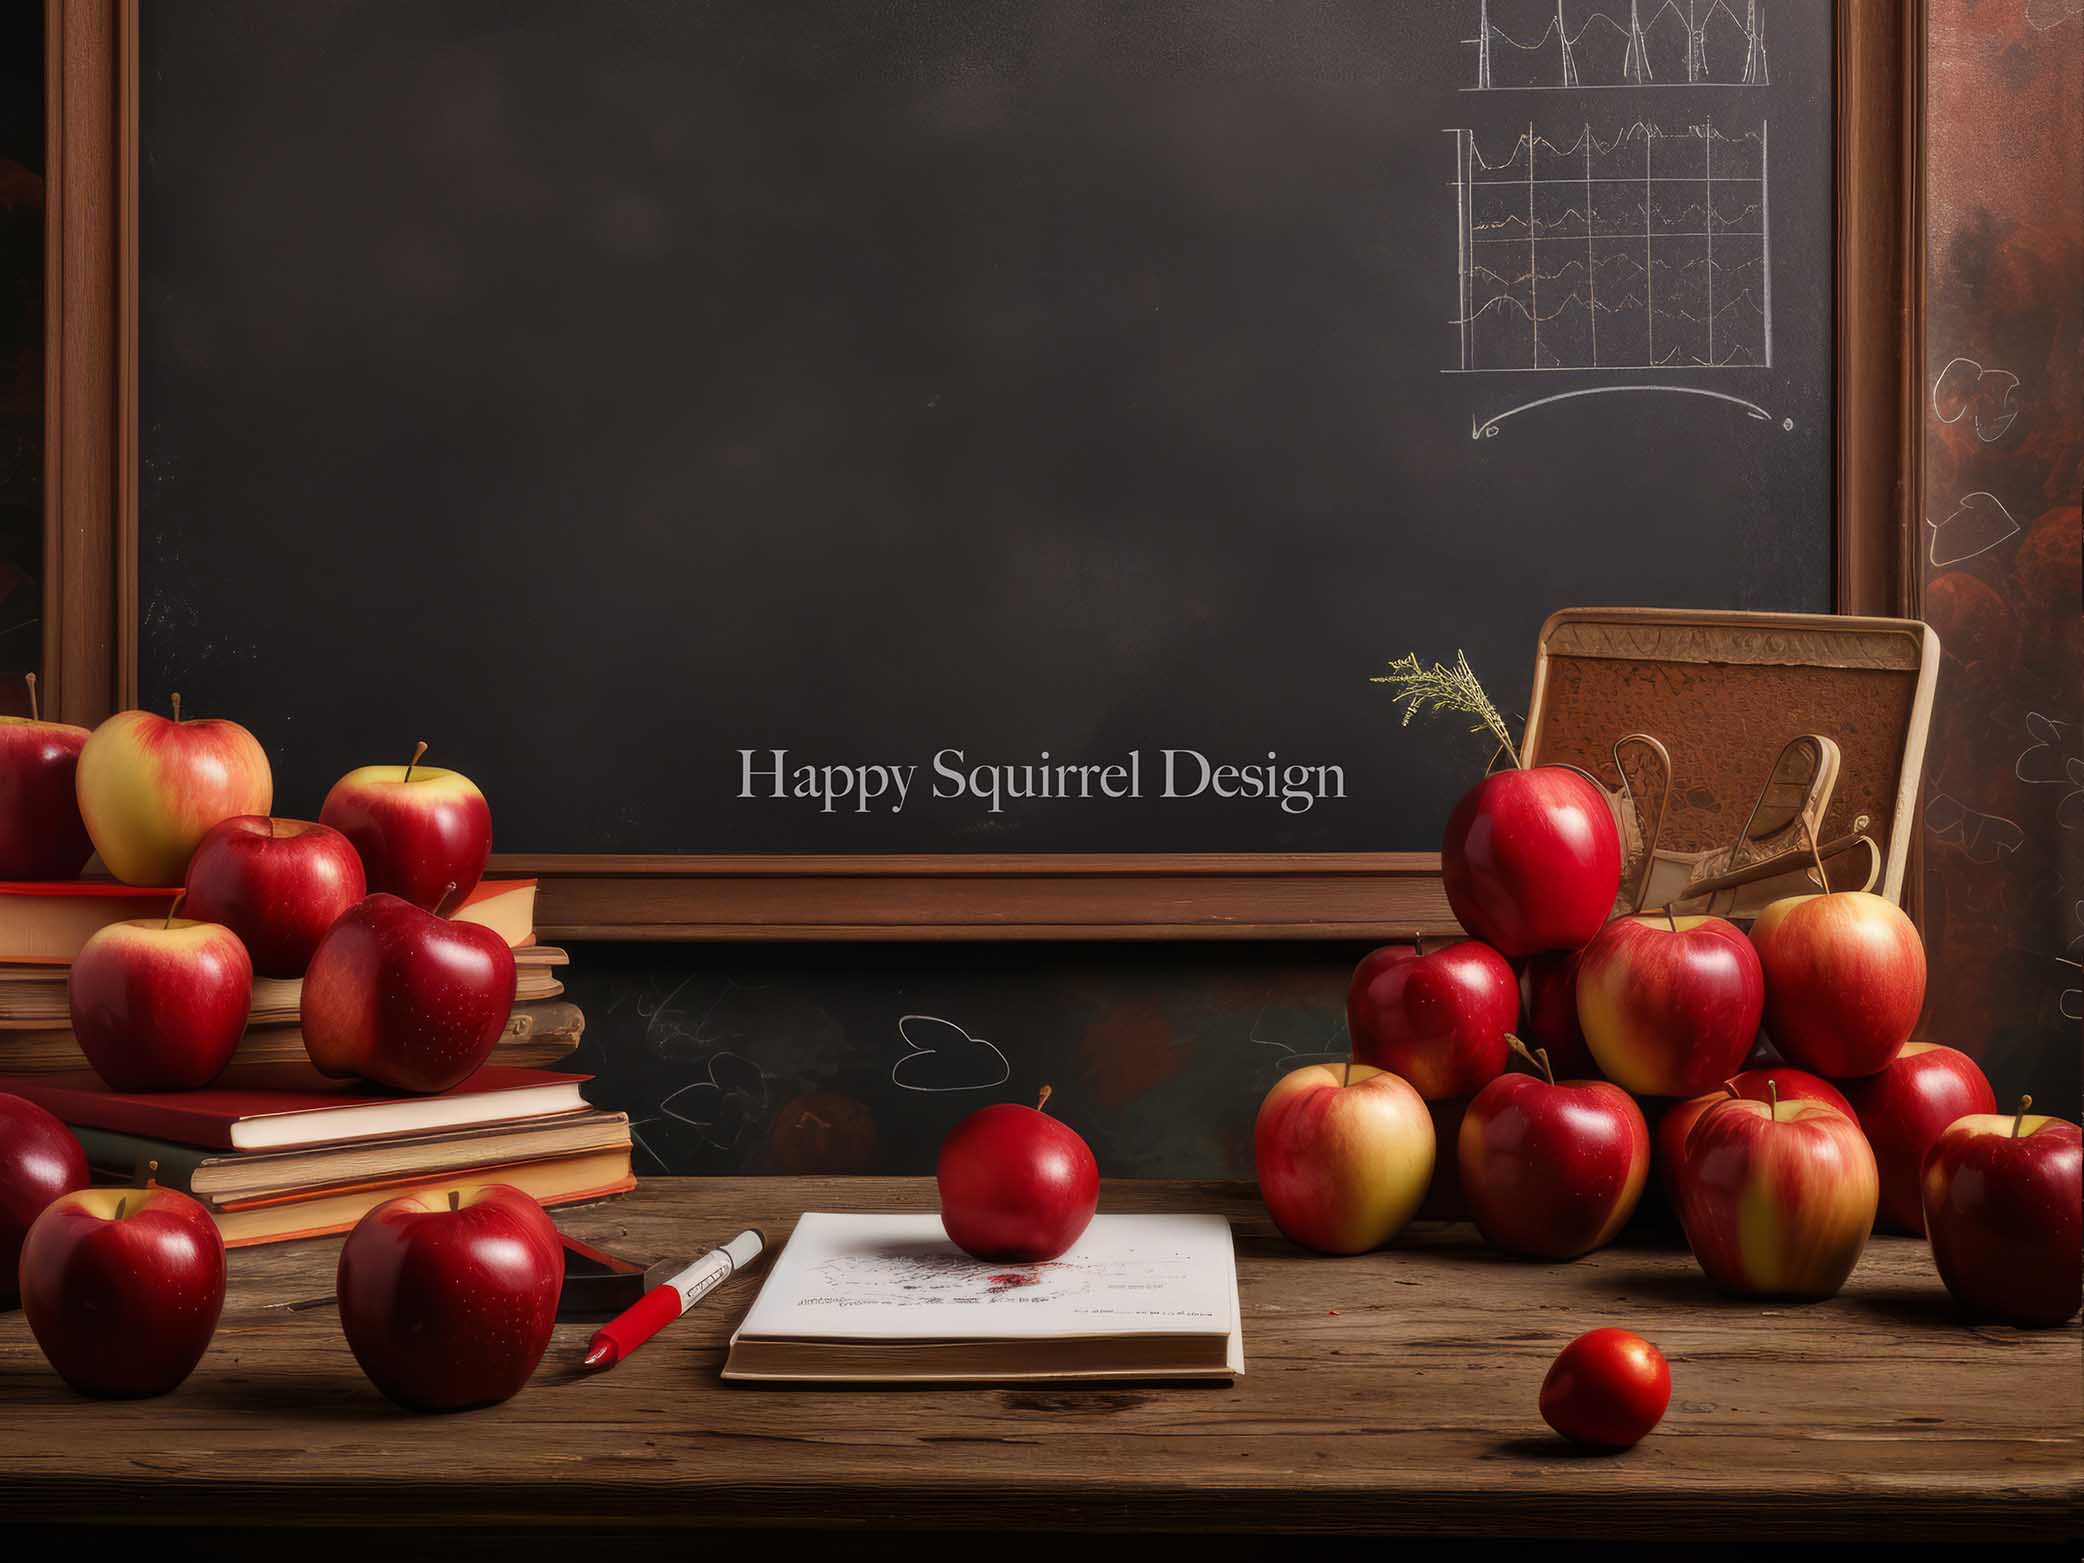 Kate Teachers Desk Back to School Backdrop Designed by Happy Squirrel Design